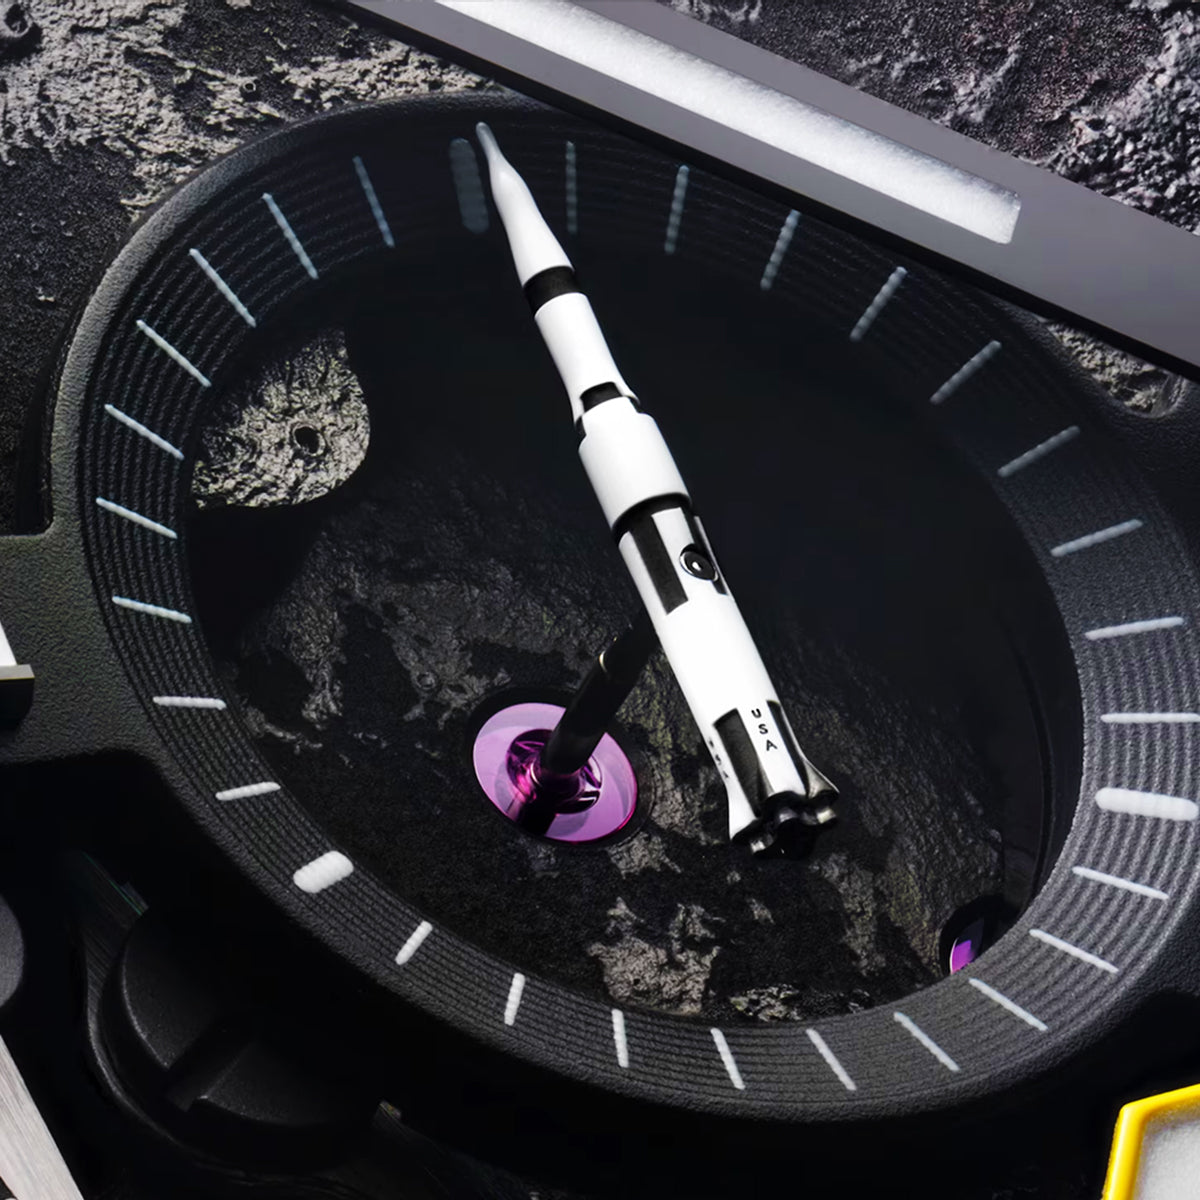 Speedmaster "Dark Side of the Moon" Apollo 8 Black Ceramic Men's Watch